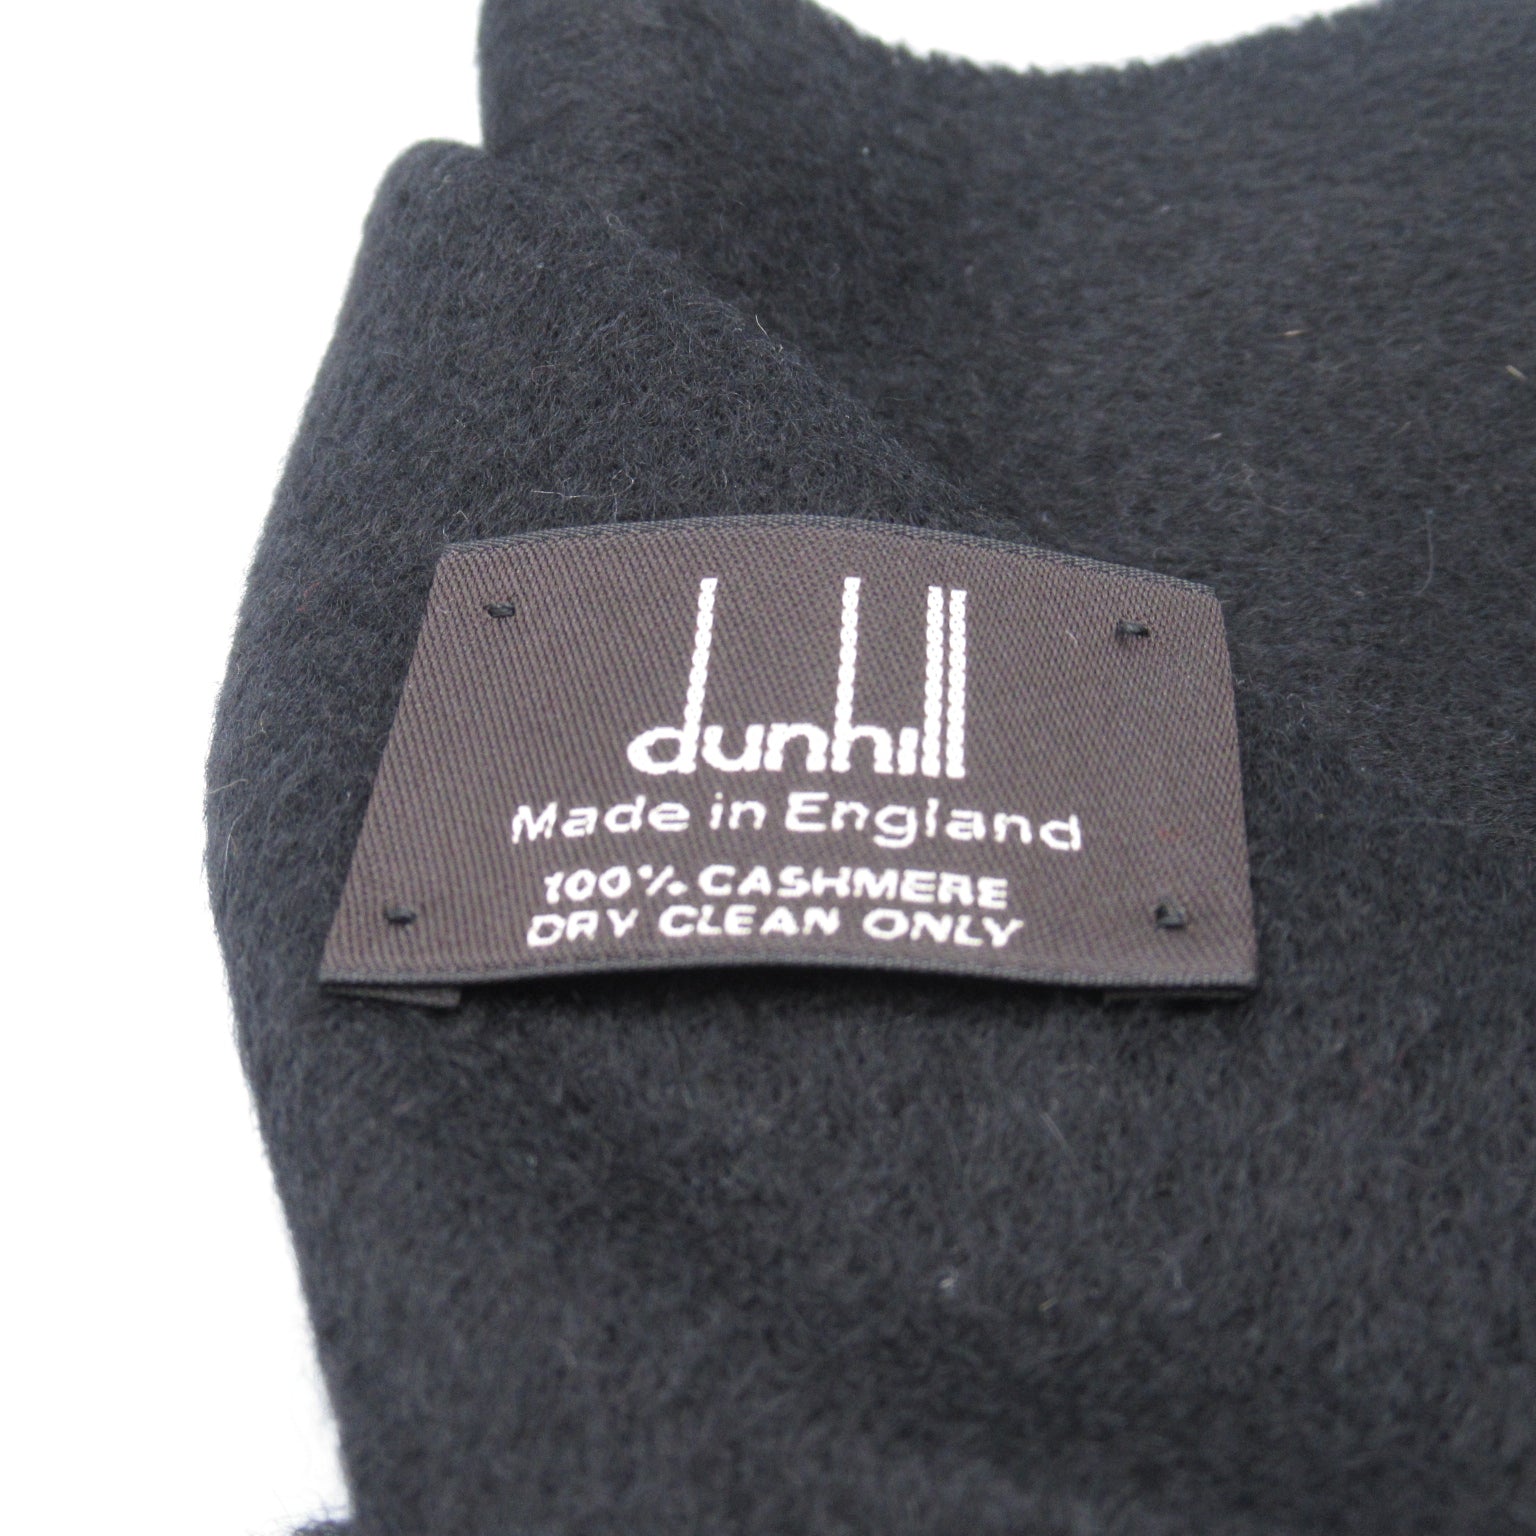 Dunhill Dunhill Maffler Cashmere  Clothes